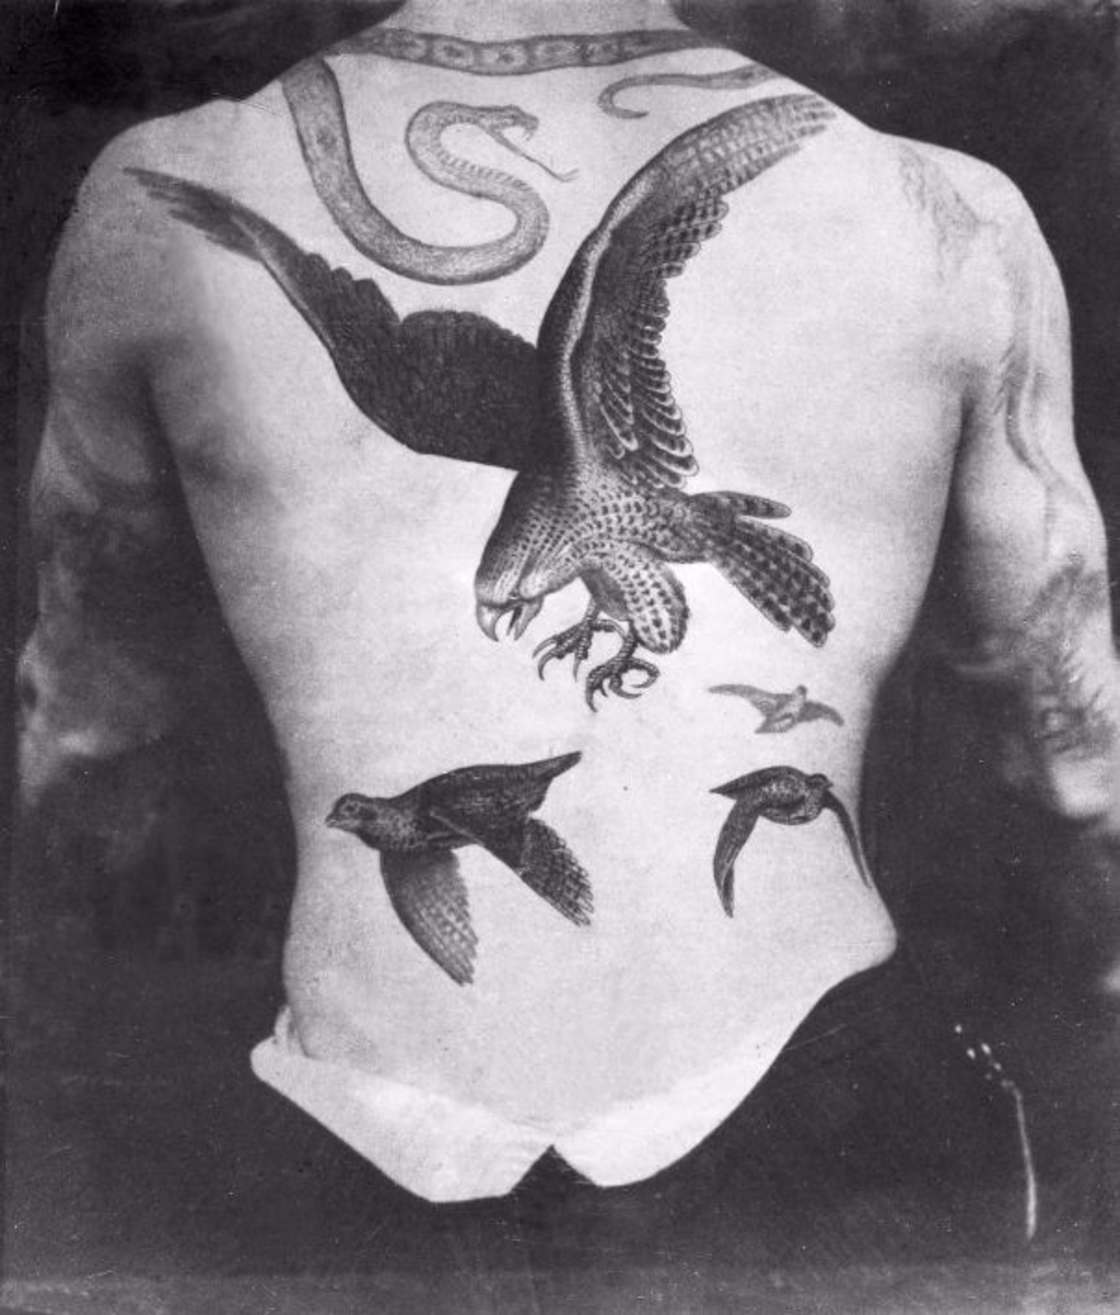 tattoos Sutherland Macdonald - tattoo artist geschiedenis